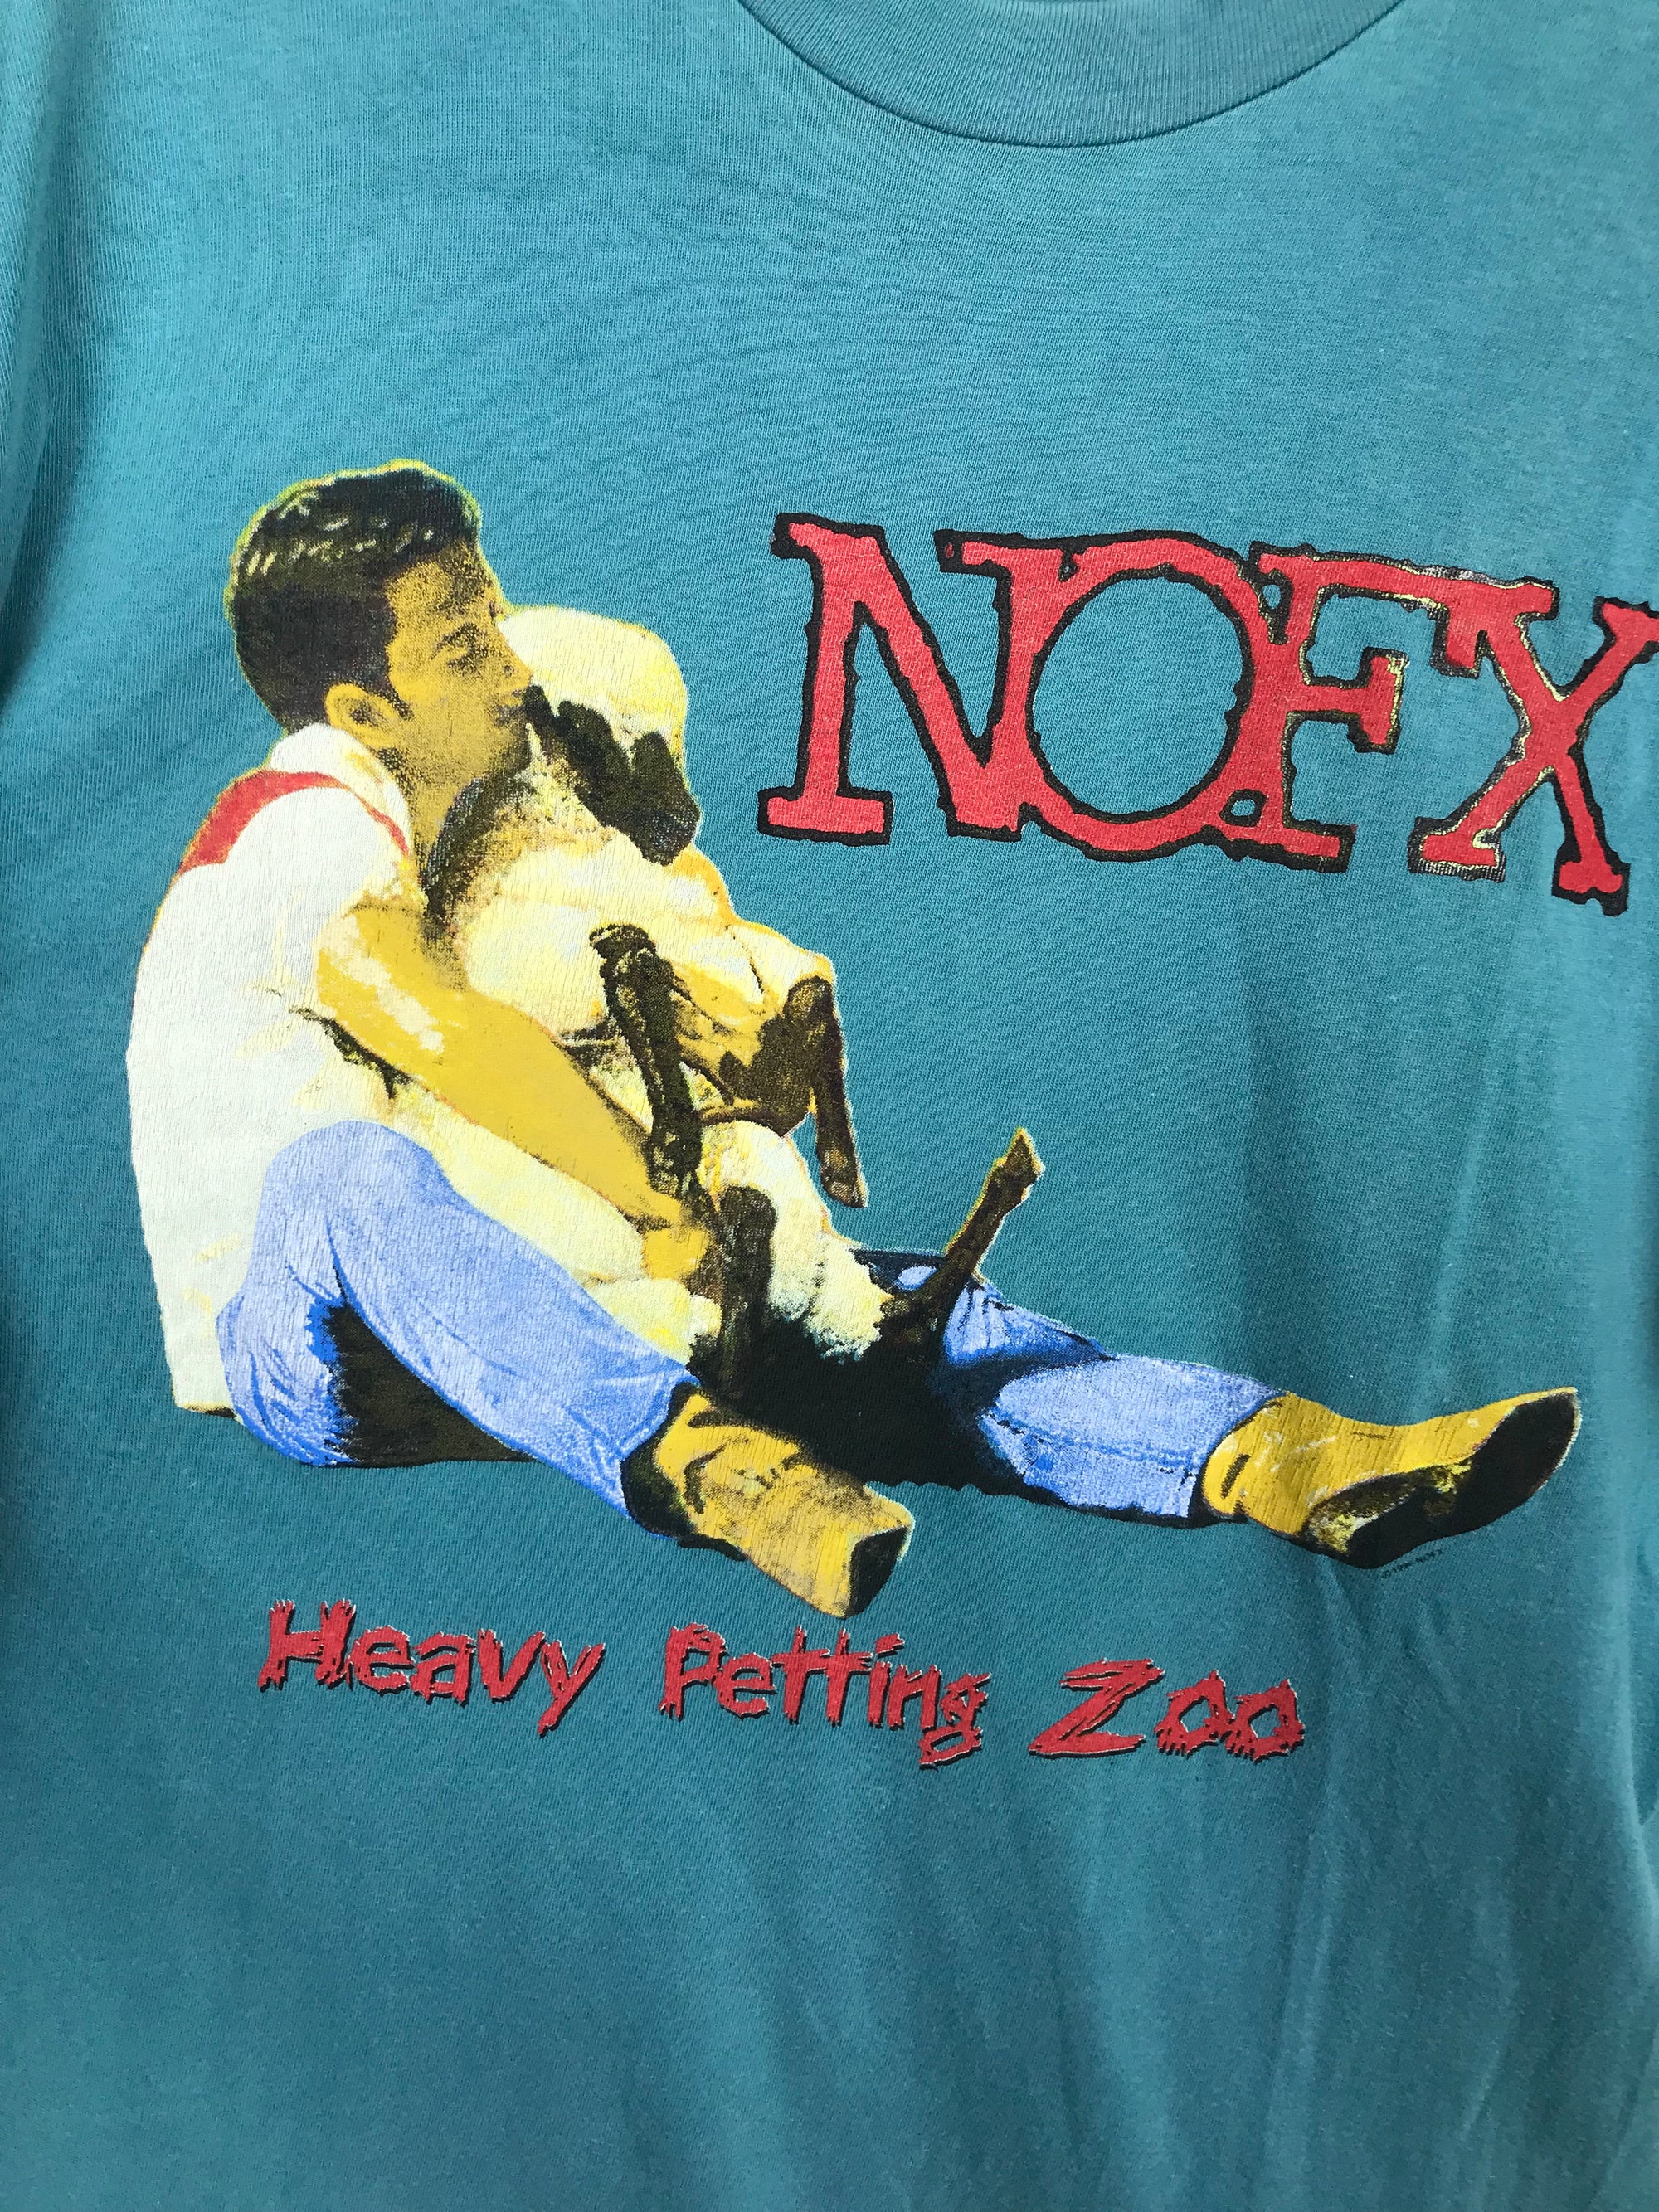 NOFX heavy petting zoo punk rock band